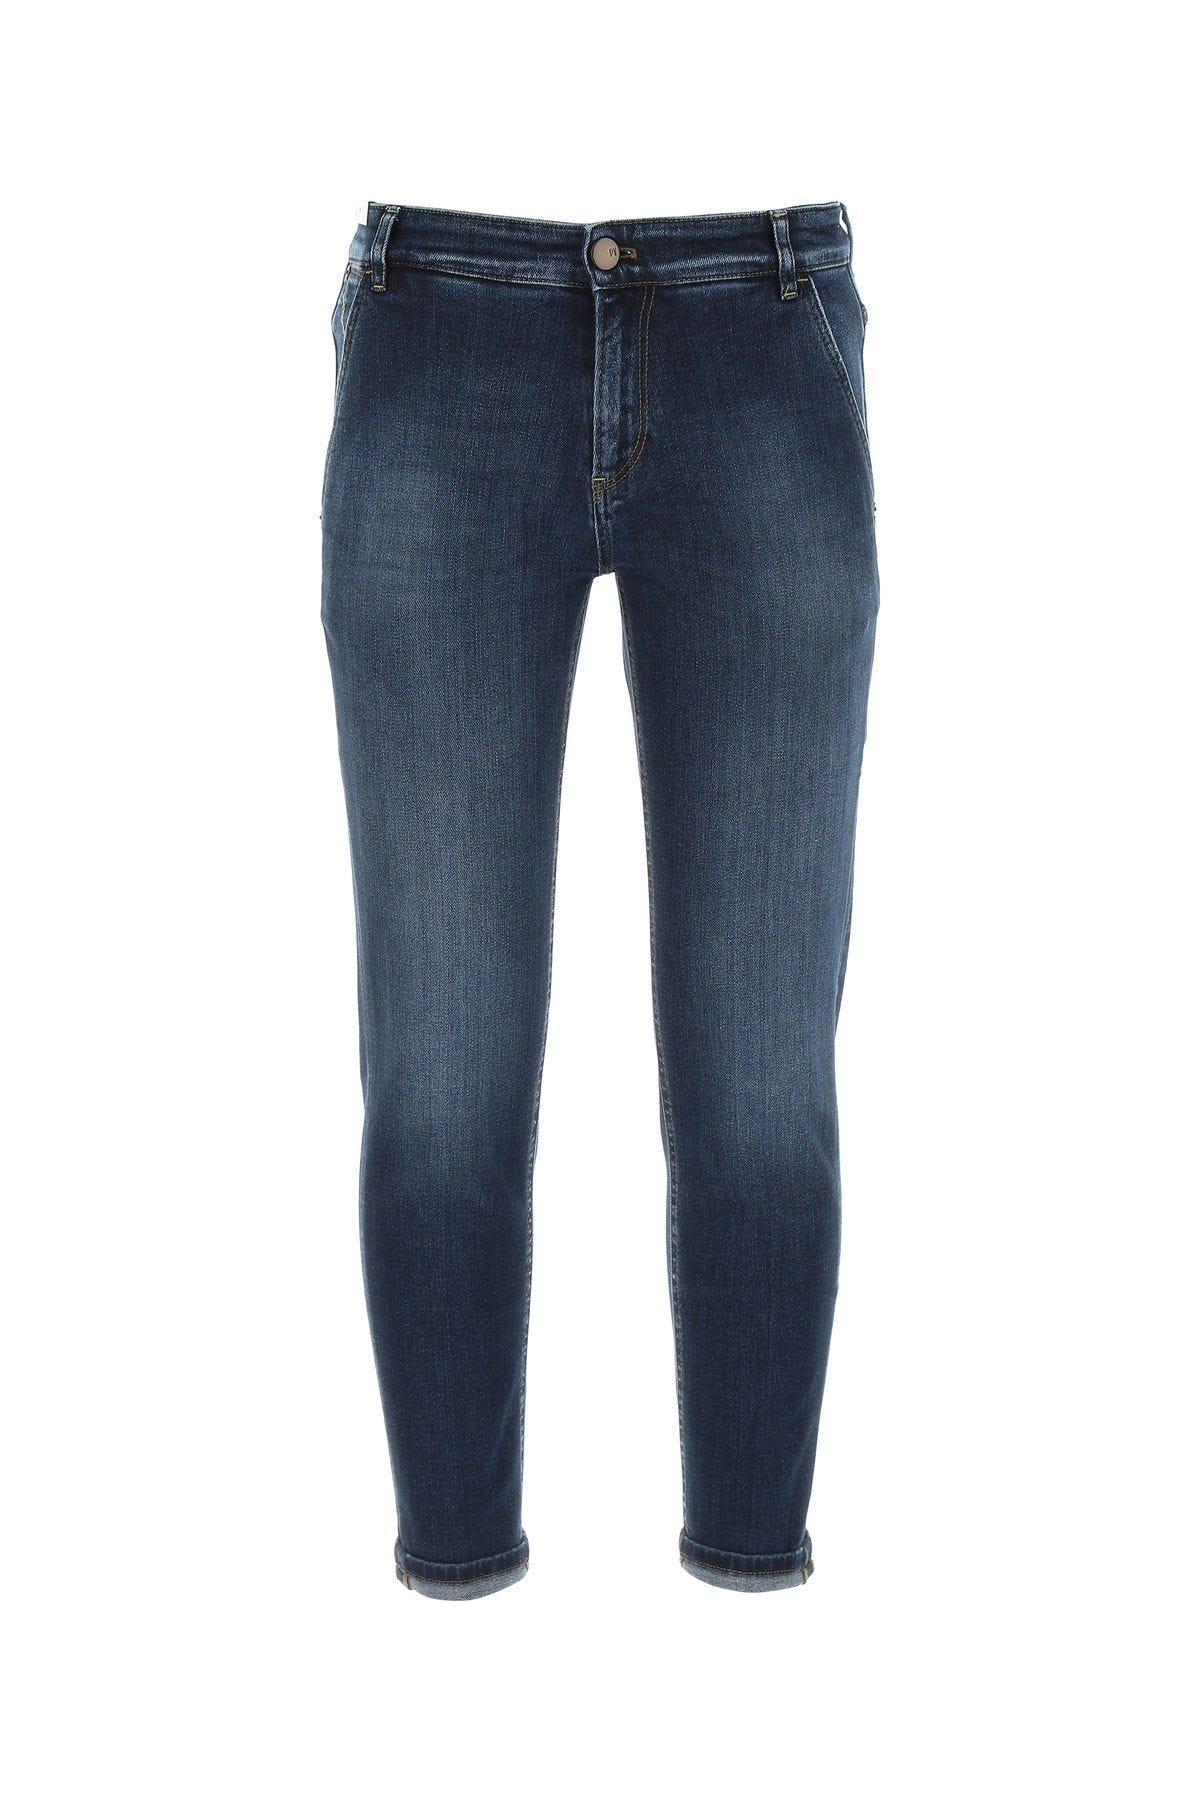 PT01 Dark Blue Stretch Denim Jeans